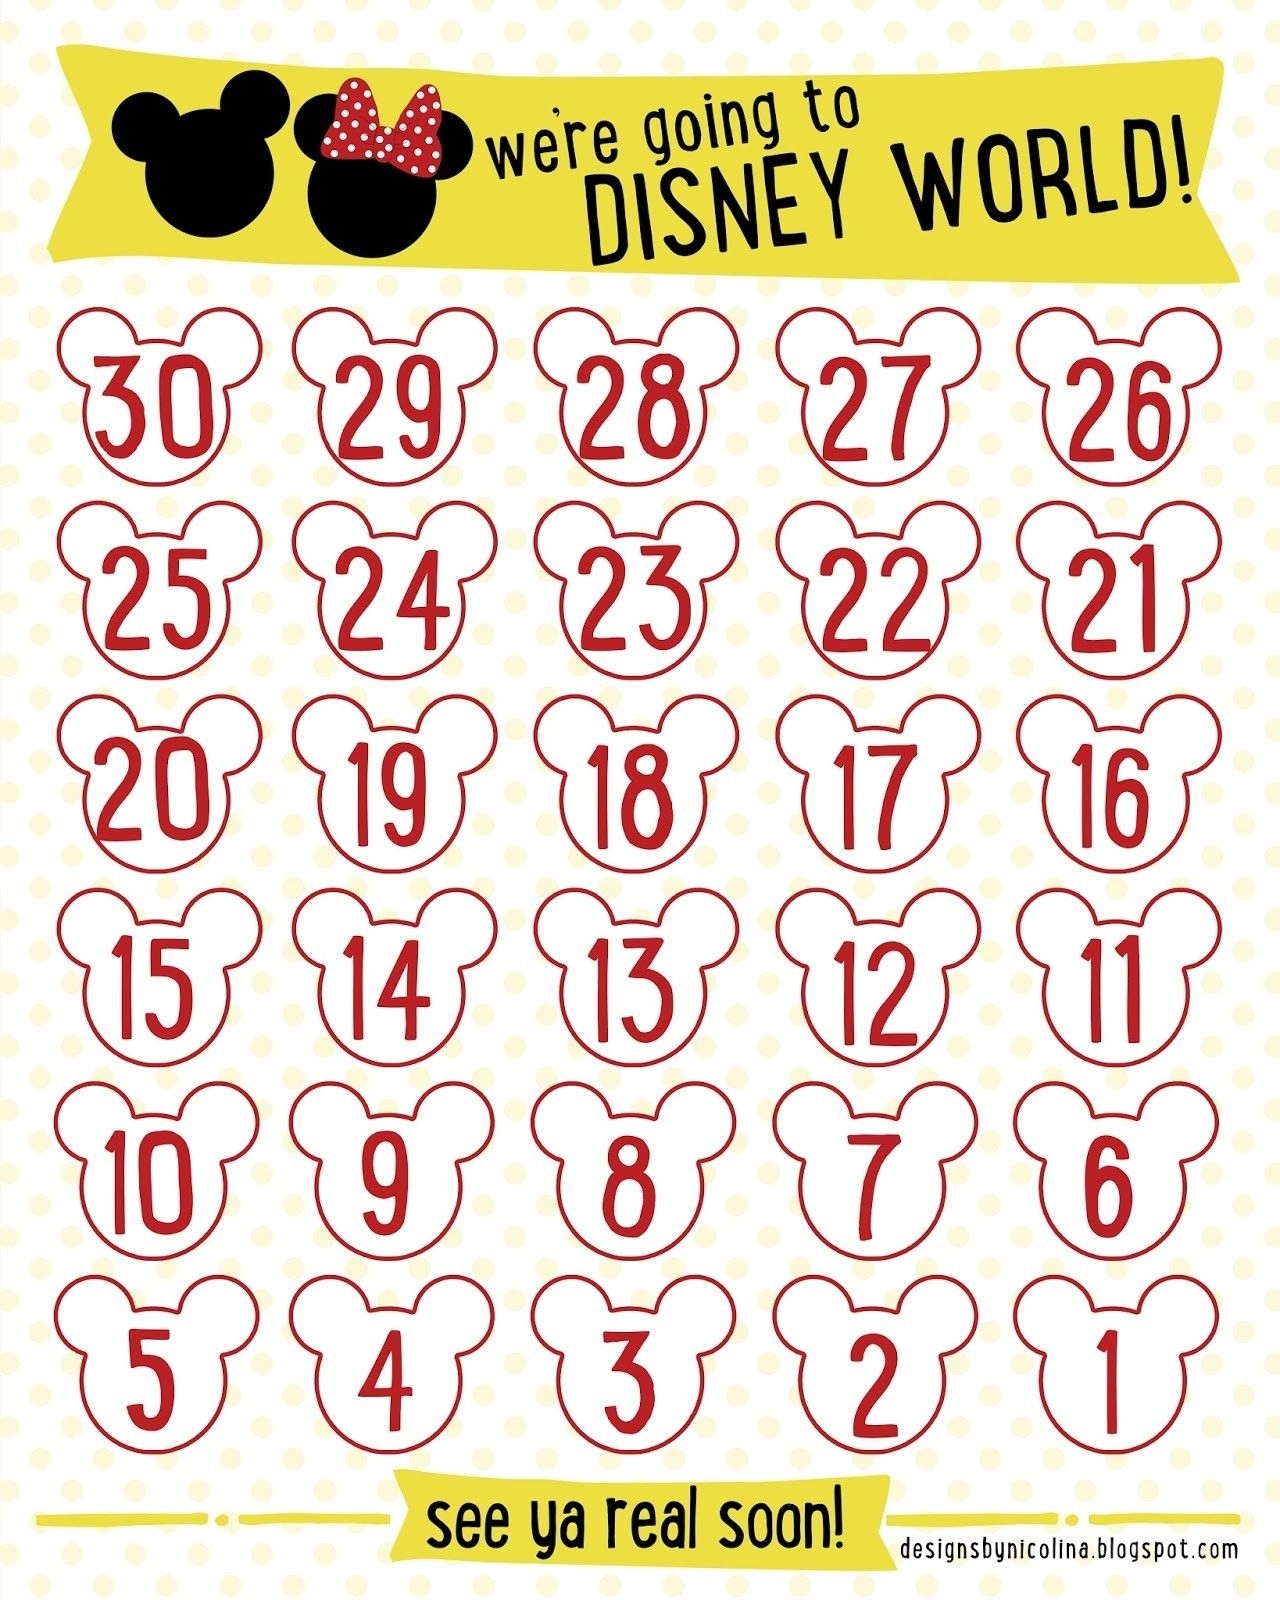 Countdown Calendars Printable Search Results For “Disney Dashing Free Printable Disneyland Countdown Calendar 2020